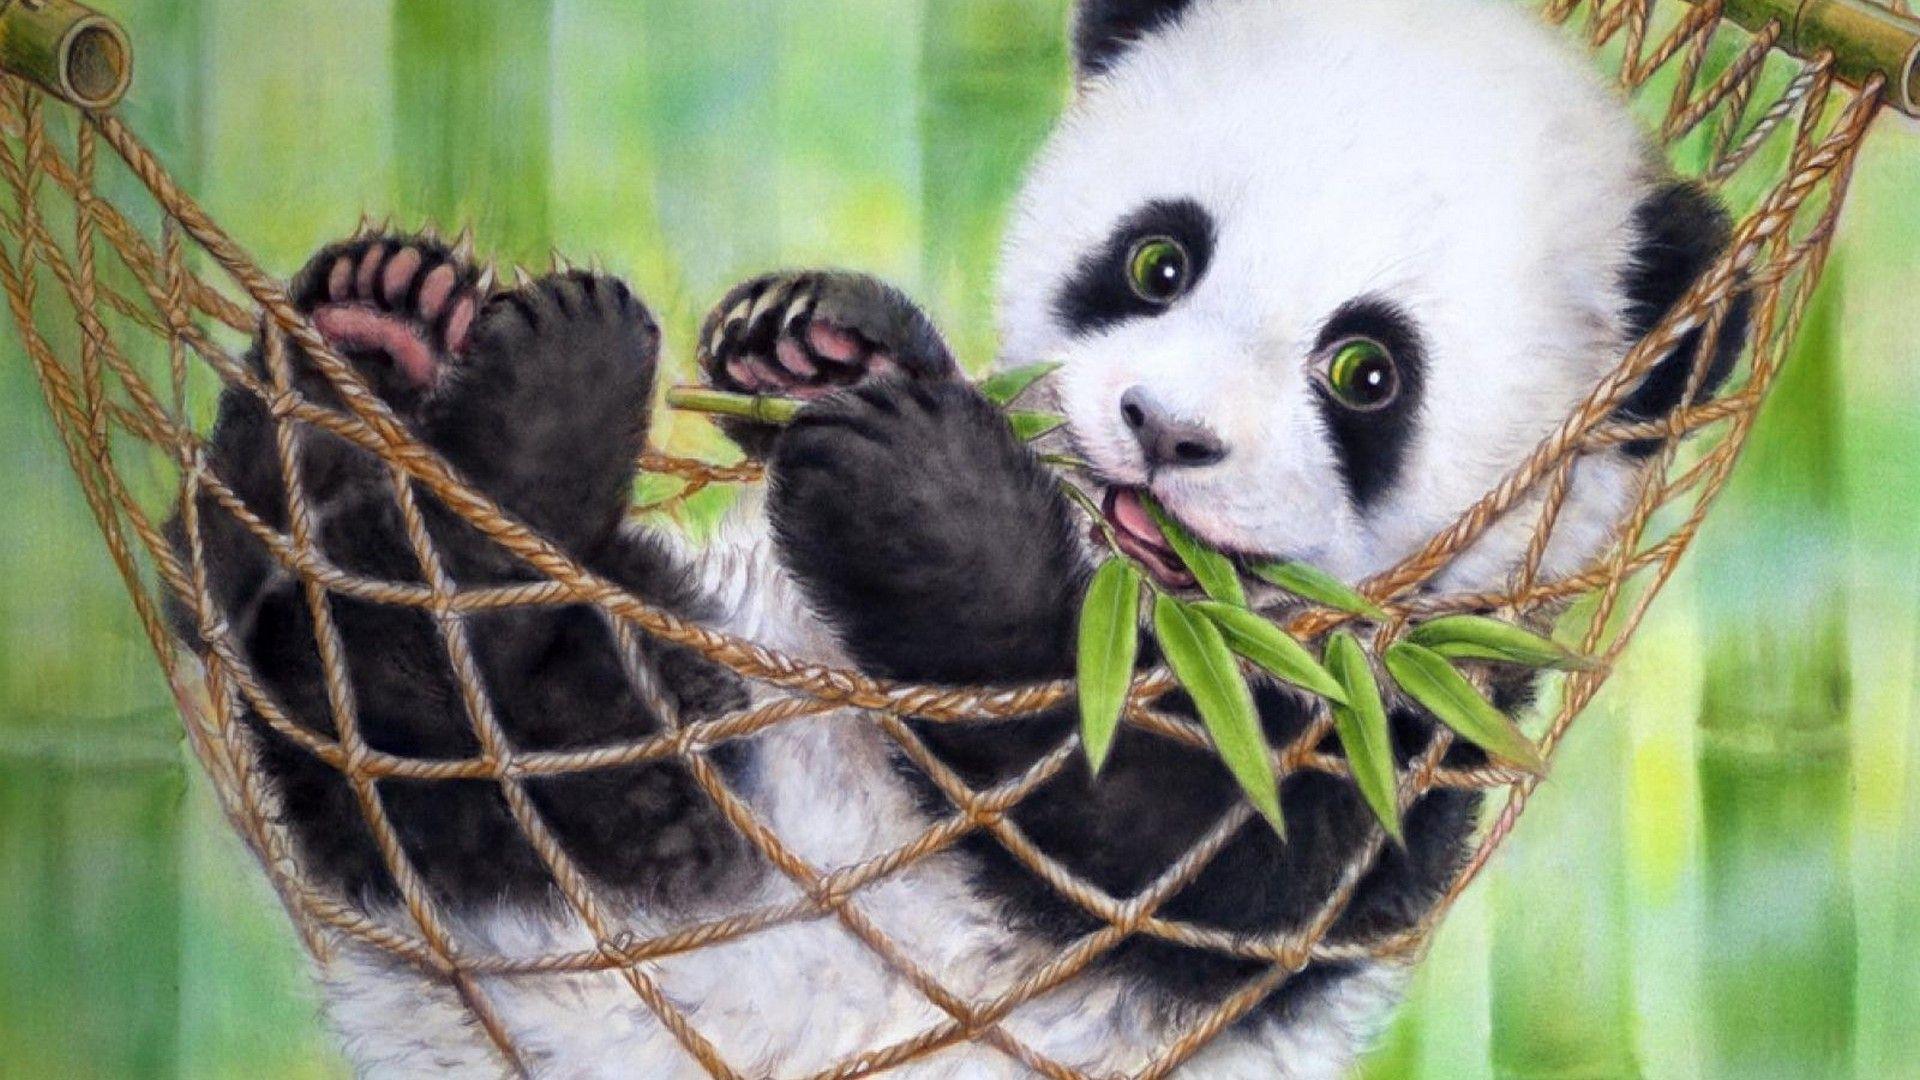 Baby Panda Bear Wallpapers Top Free Baby Panda Bear Backgrounds Wallpaperaccess